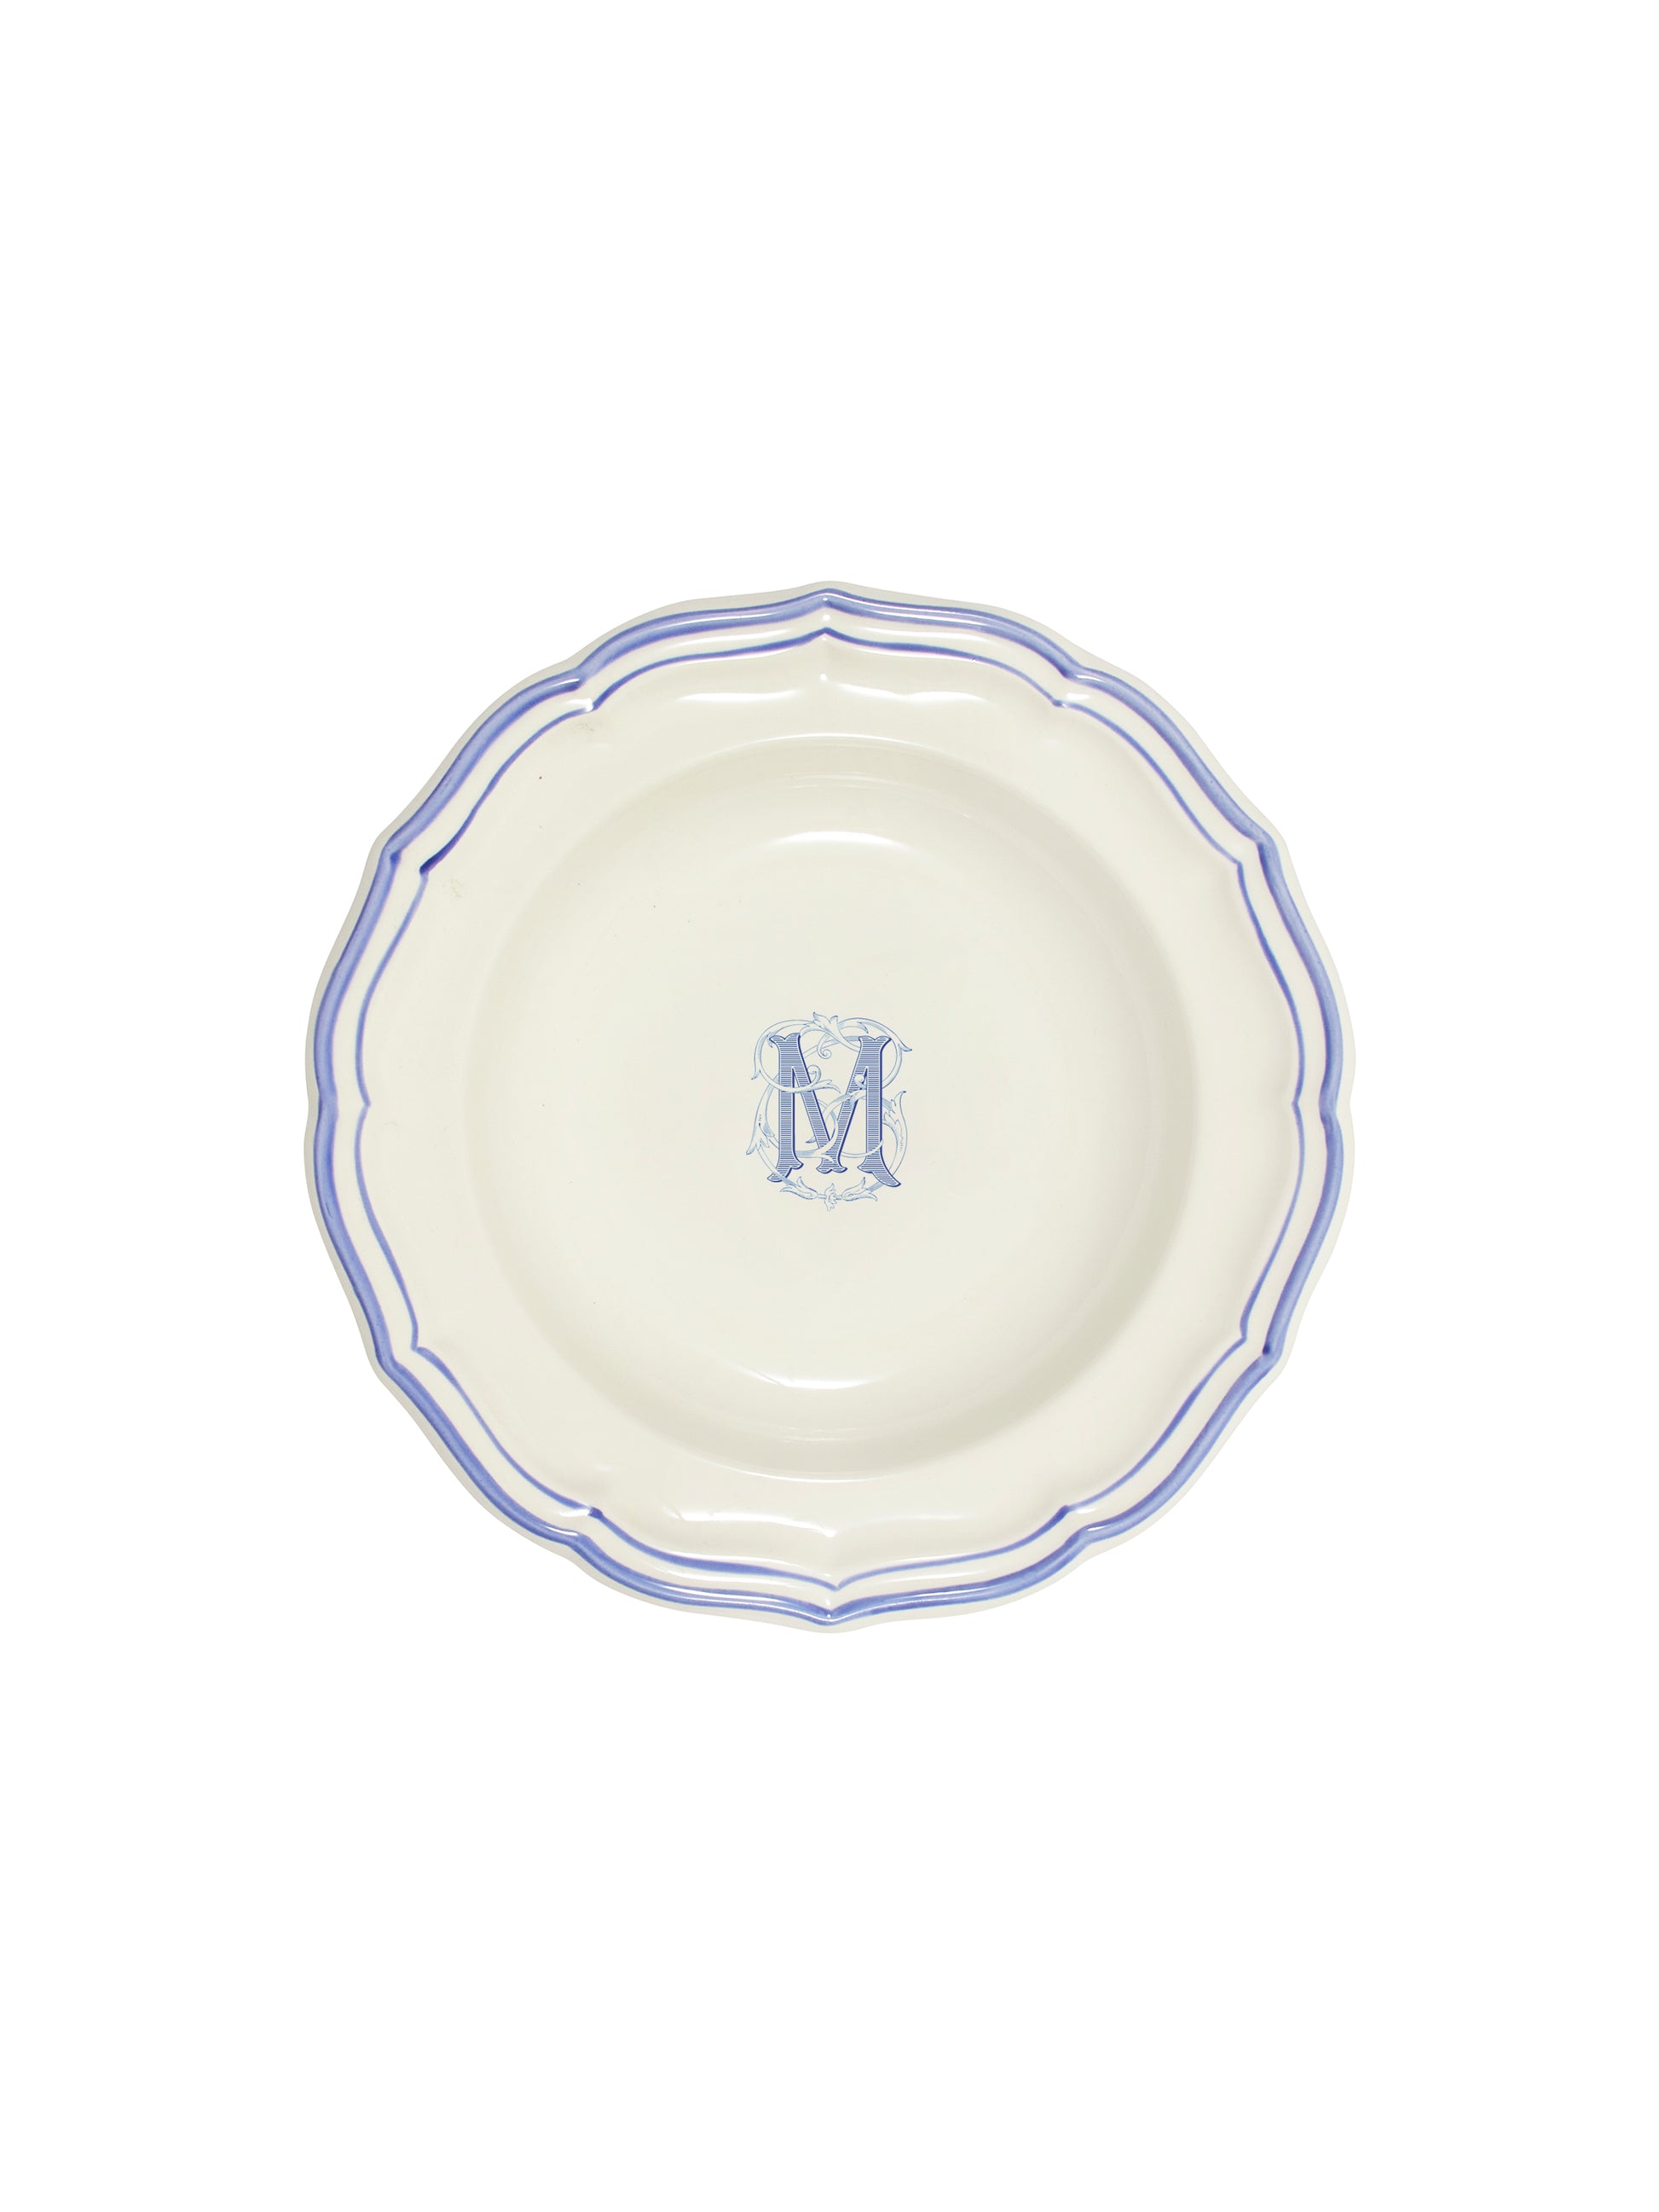 Gien Filet Bleu Monogram Soup Plate M Weston Table